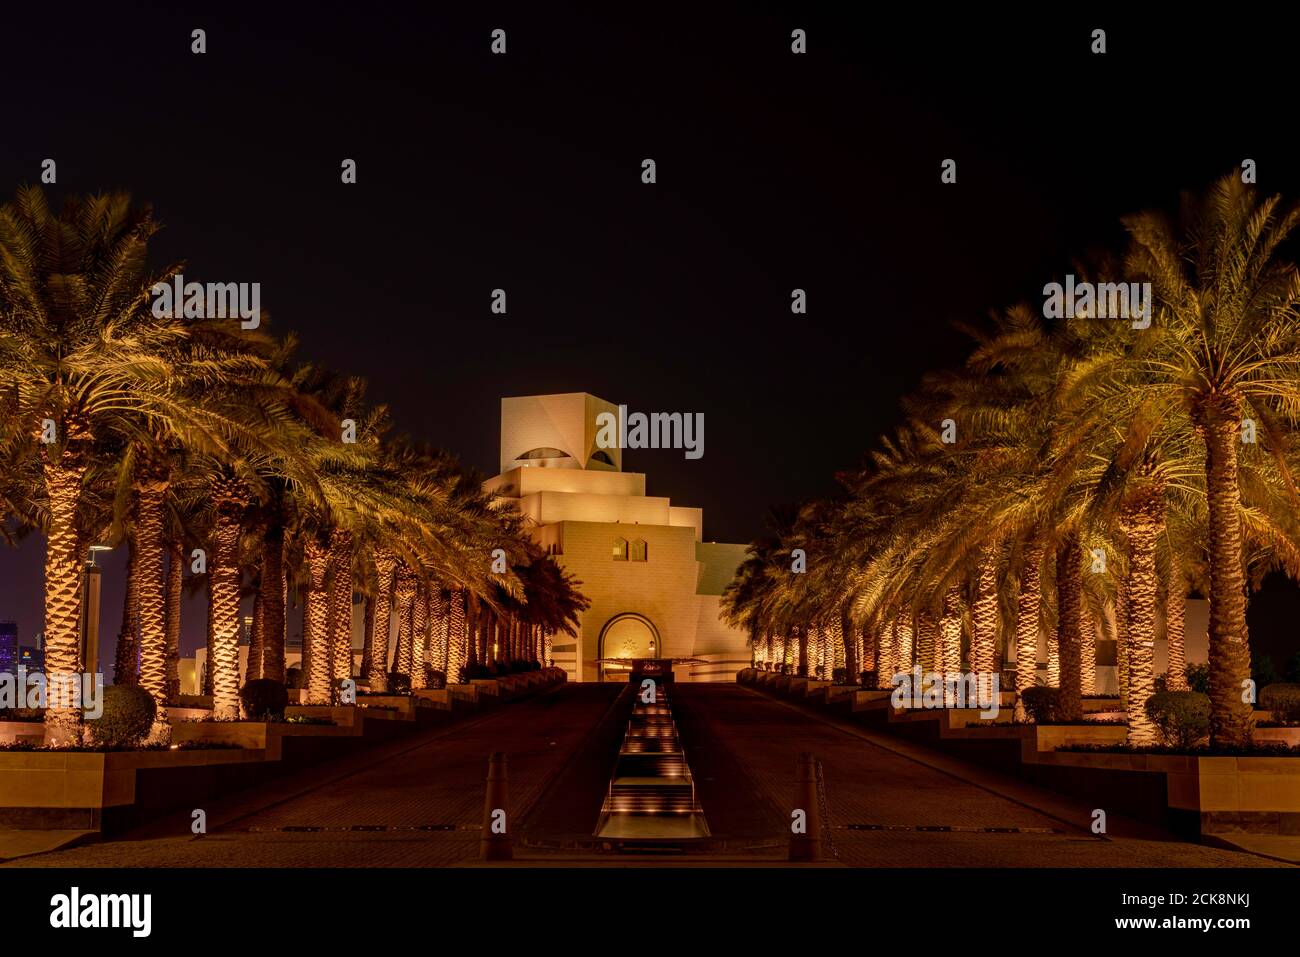 Doha, Qatar - August 26, 2020: Night view of Qatar city landmark, Museum of Islamic Art (MIA), showcasing modern Arabian architecture and construction Stock Photo